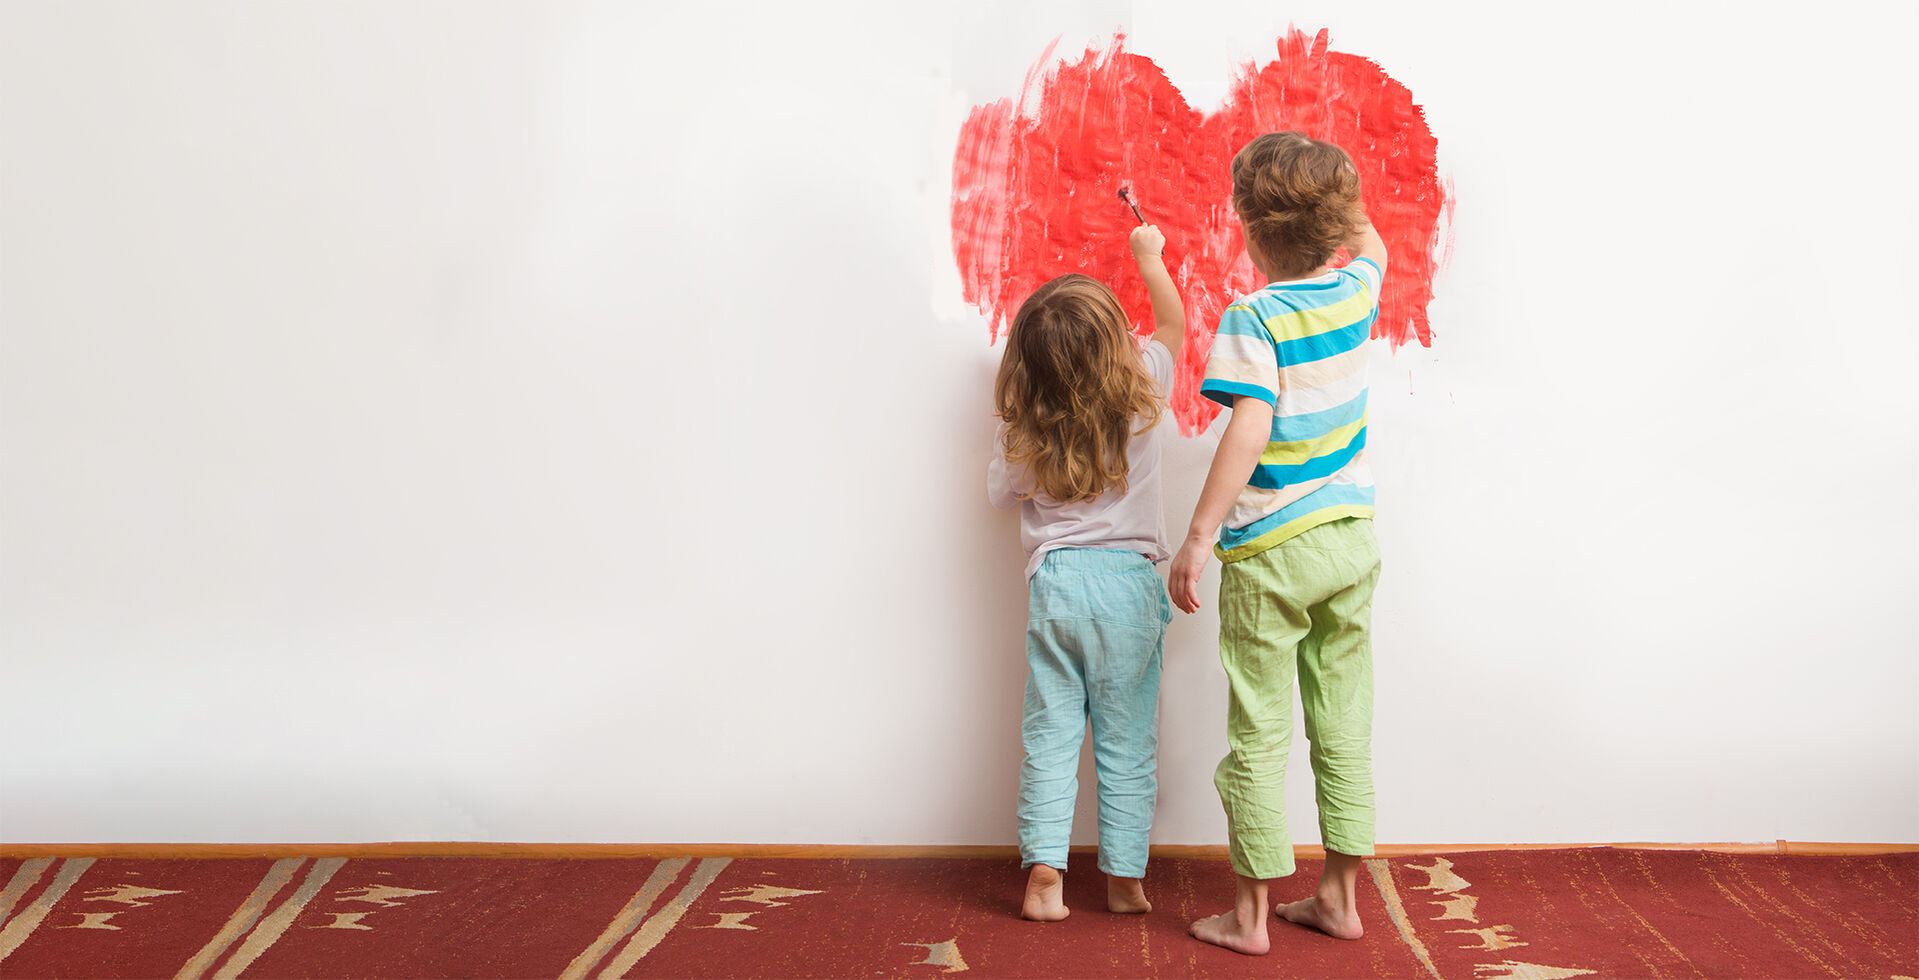 Kinder malen eine Wand rot an